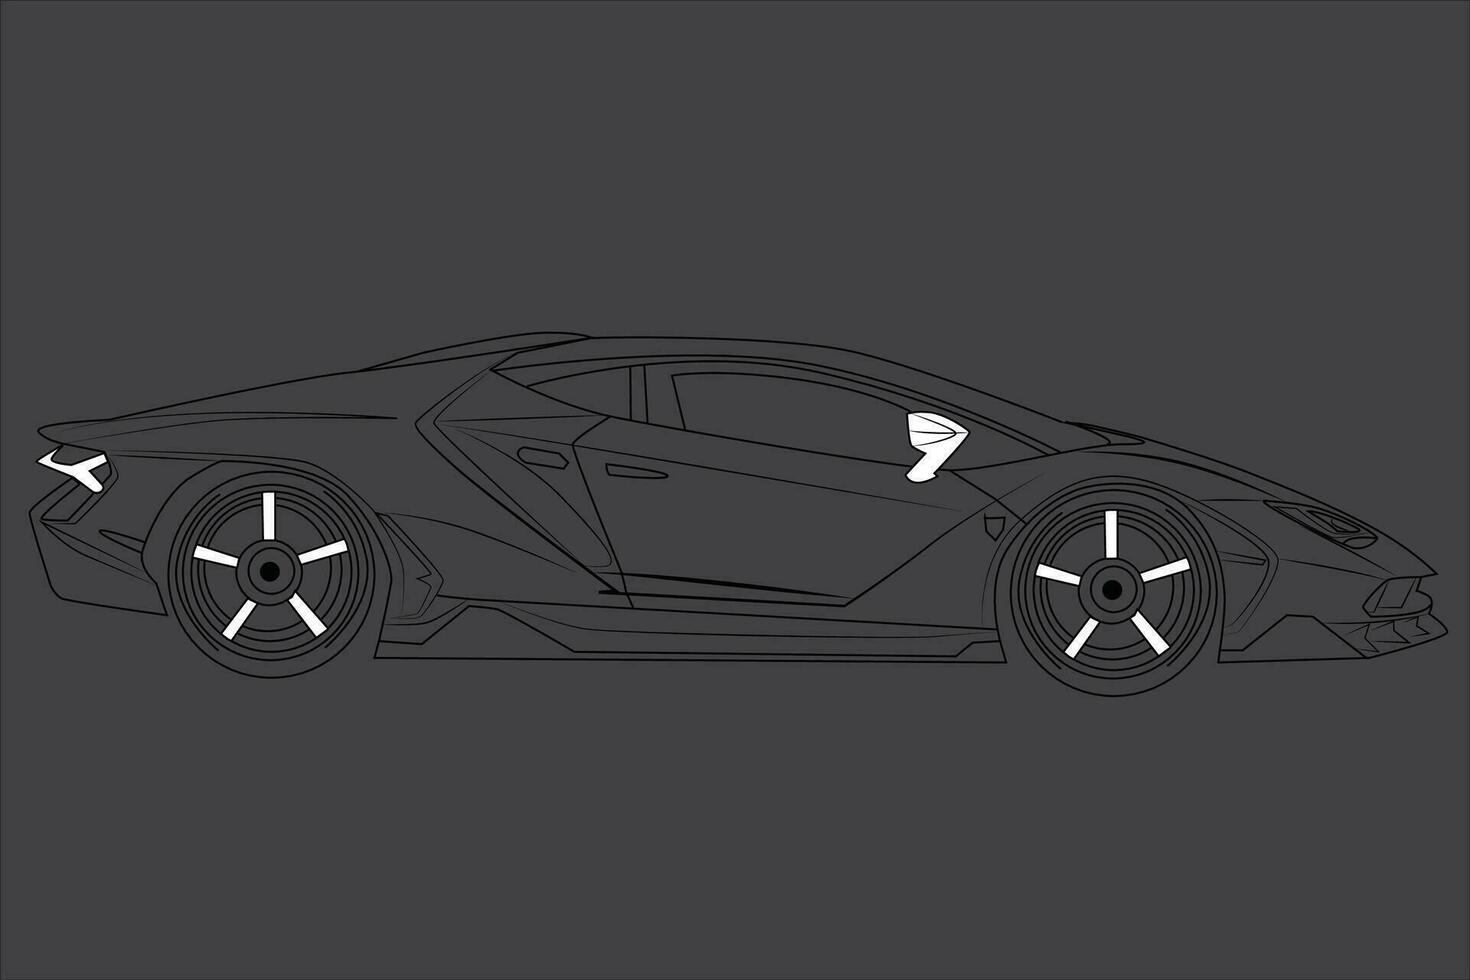 sporter bil isolerat på grå bakgrund. sporter bil sida se. svart linje konst design mall. vektor illustration.